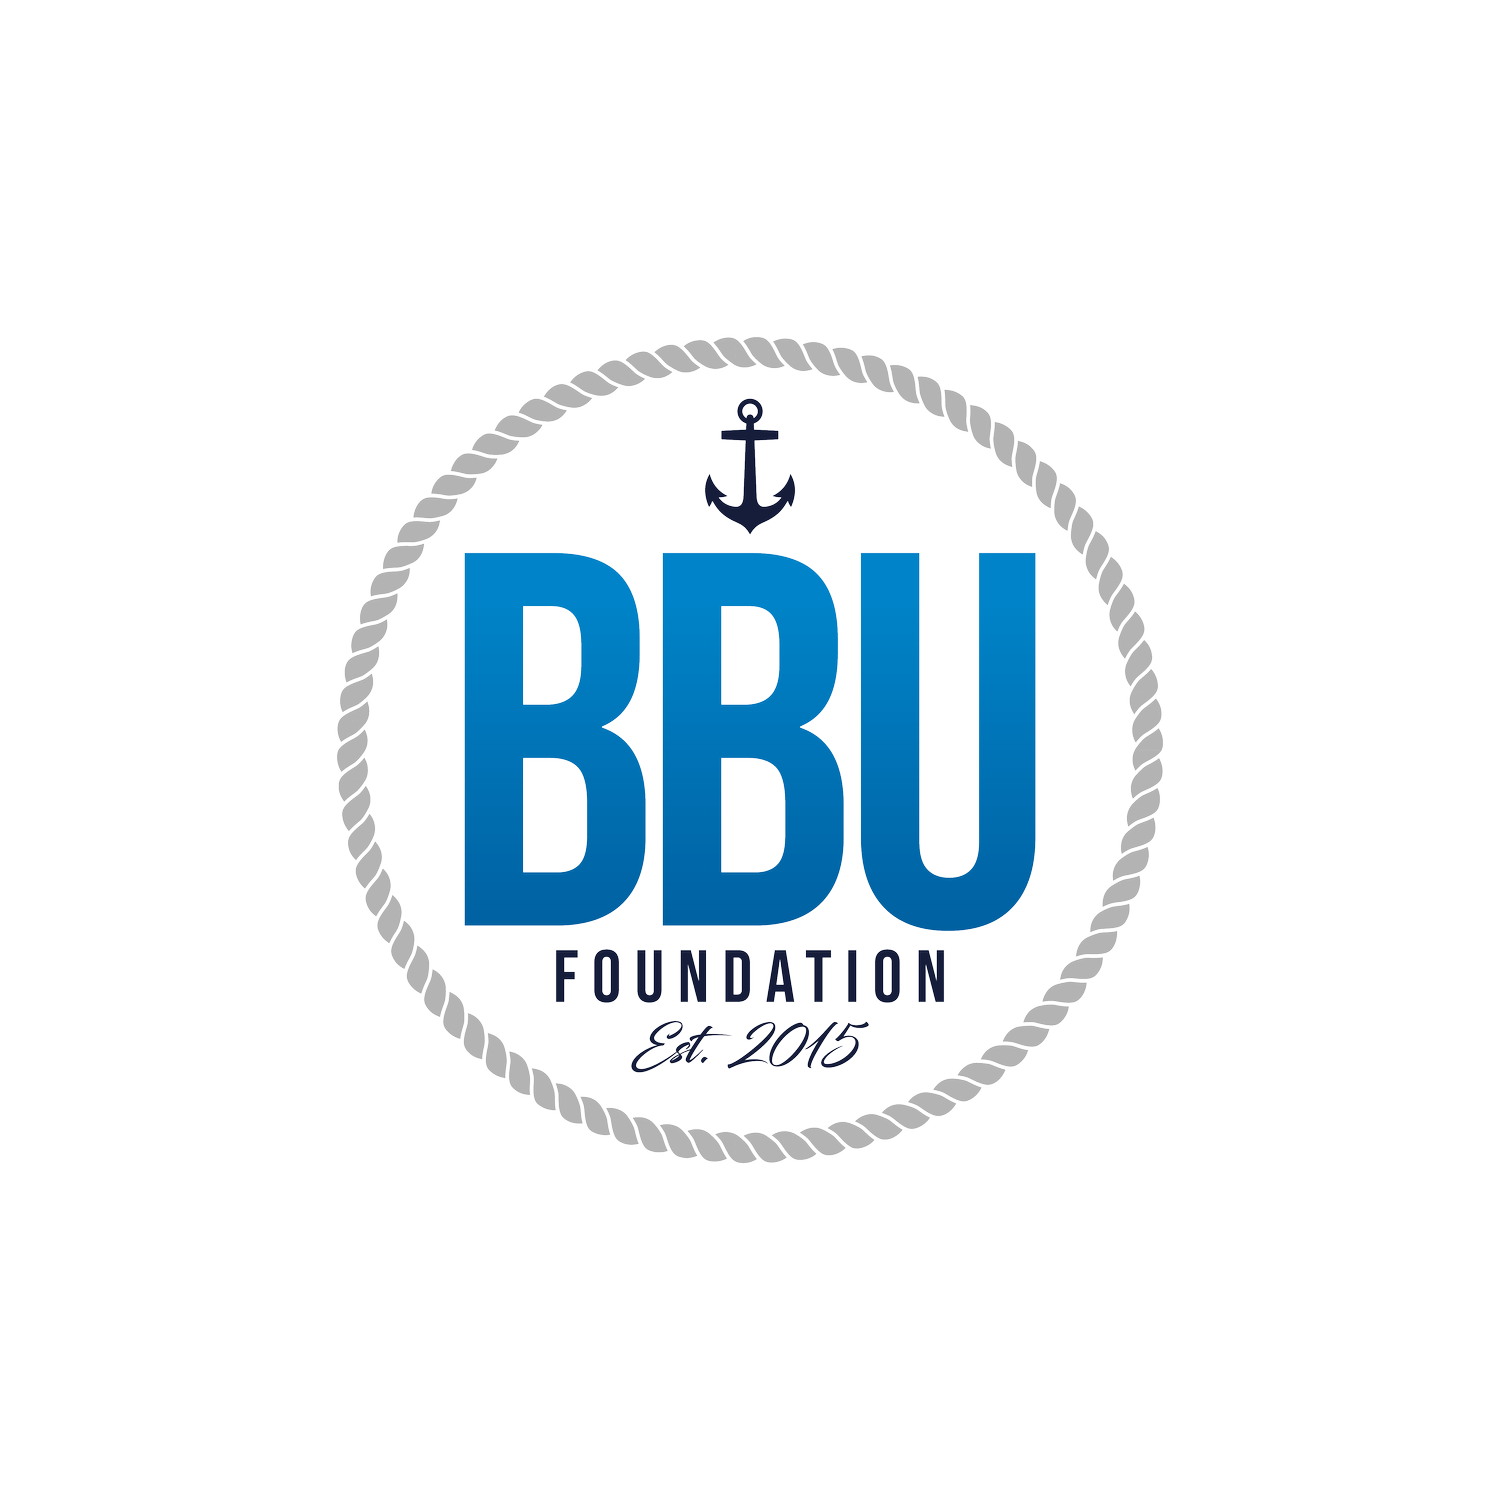 BBU Foundation